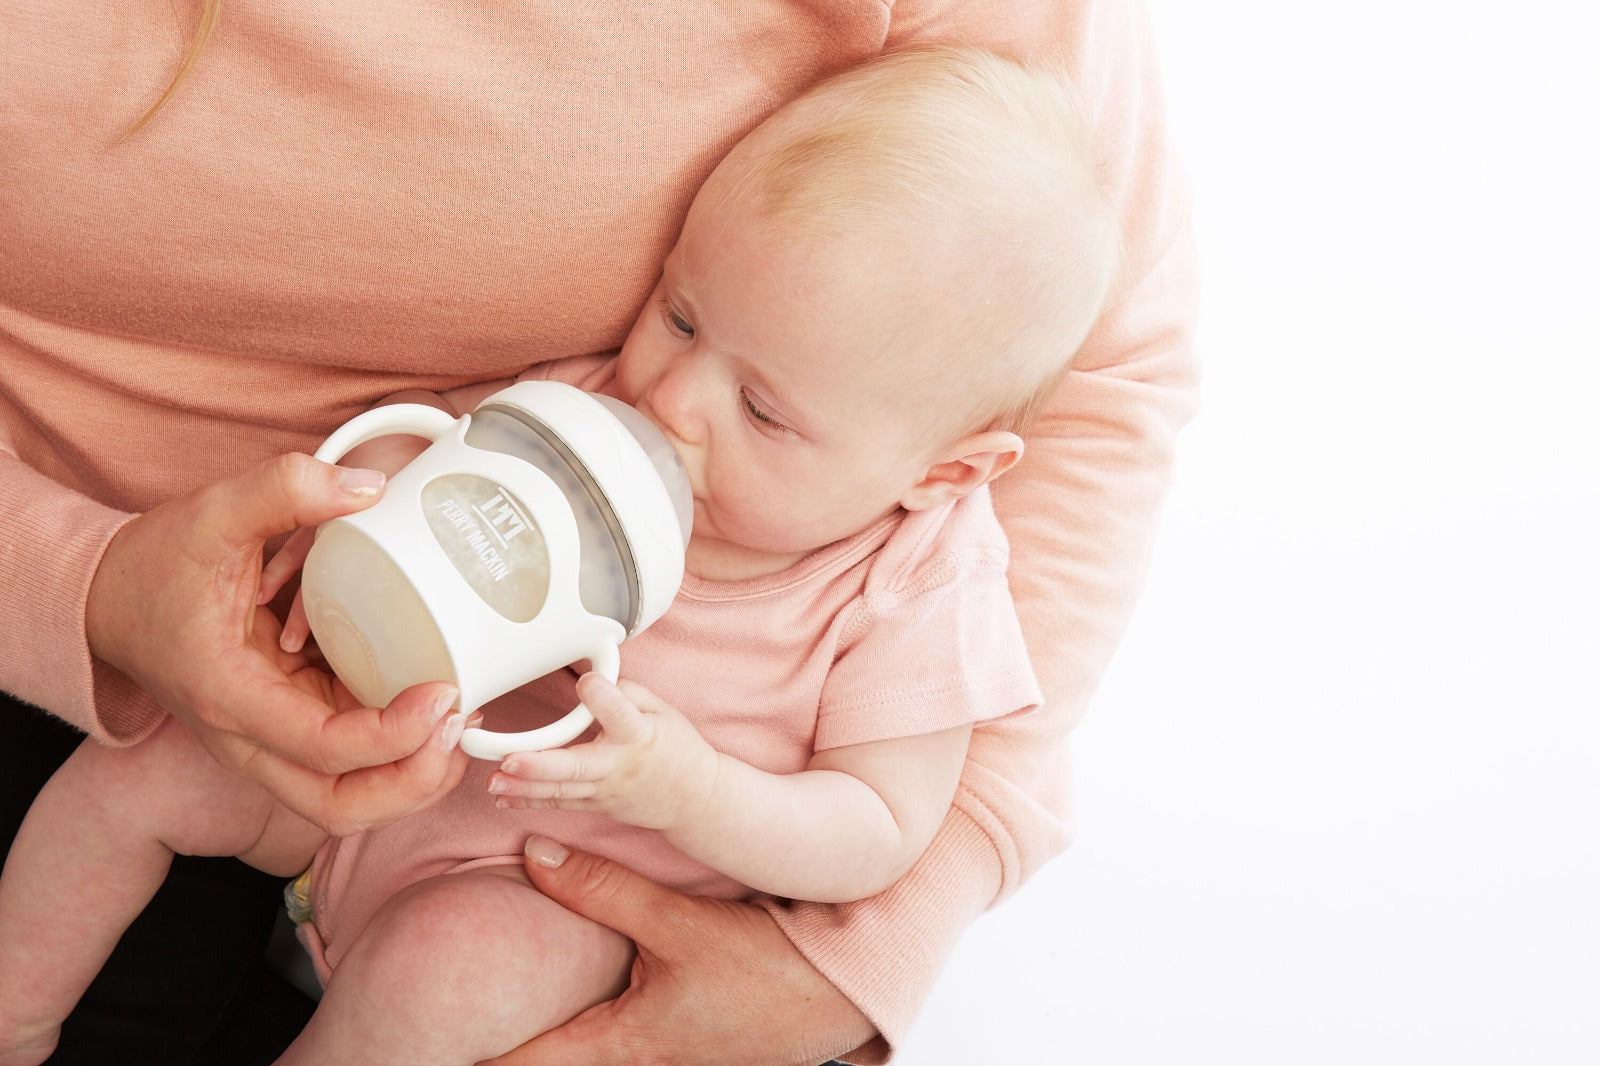 16 Baby Bottle Feeding Tips For Your Newborn Baby